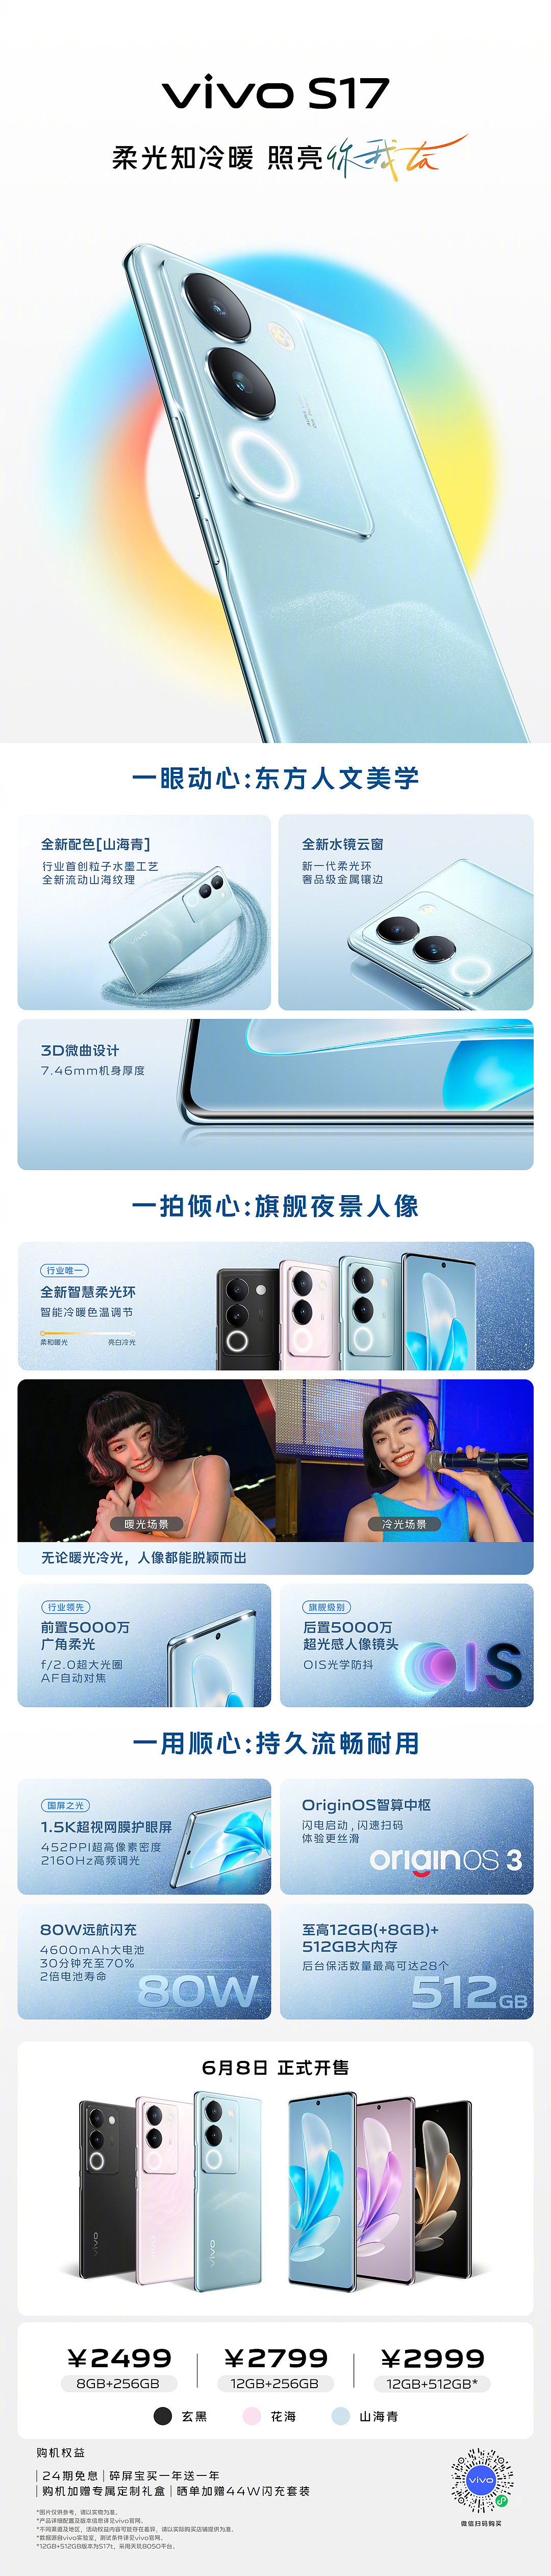 vivo S17 / S17t / S17 Pro 手机发布：主打人像摄影，售价 2499 元起 - 9